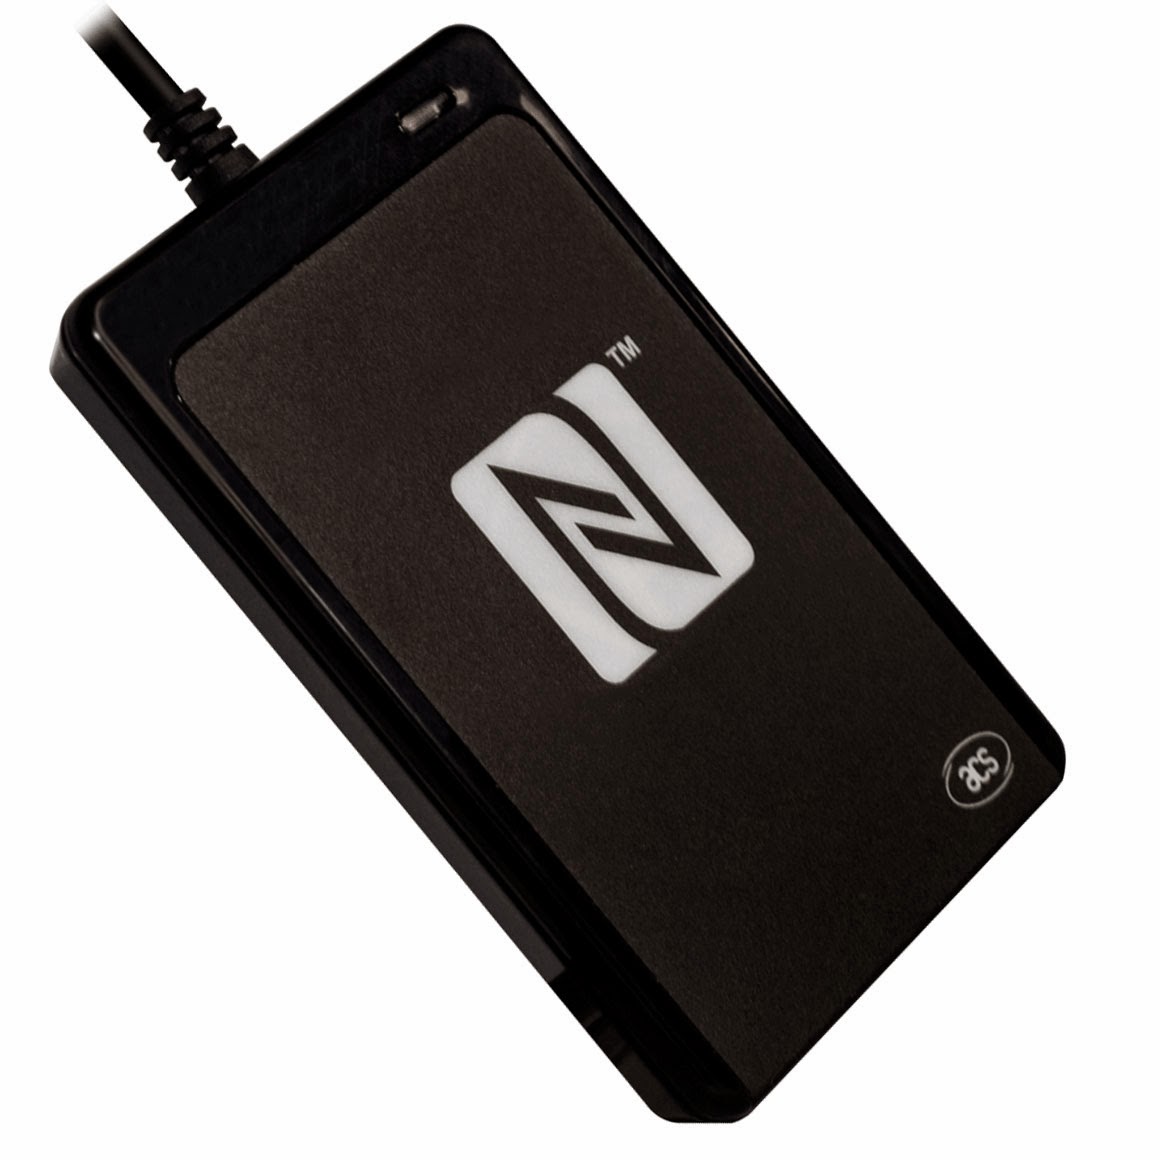 Contactless Near Field Communication (NFC) PC/SC Forum-Certified Reader ACR1252U USB 2.0